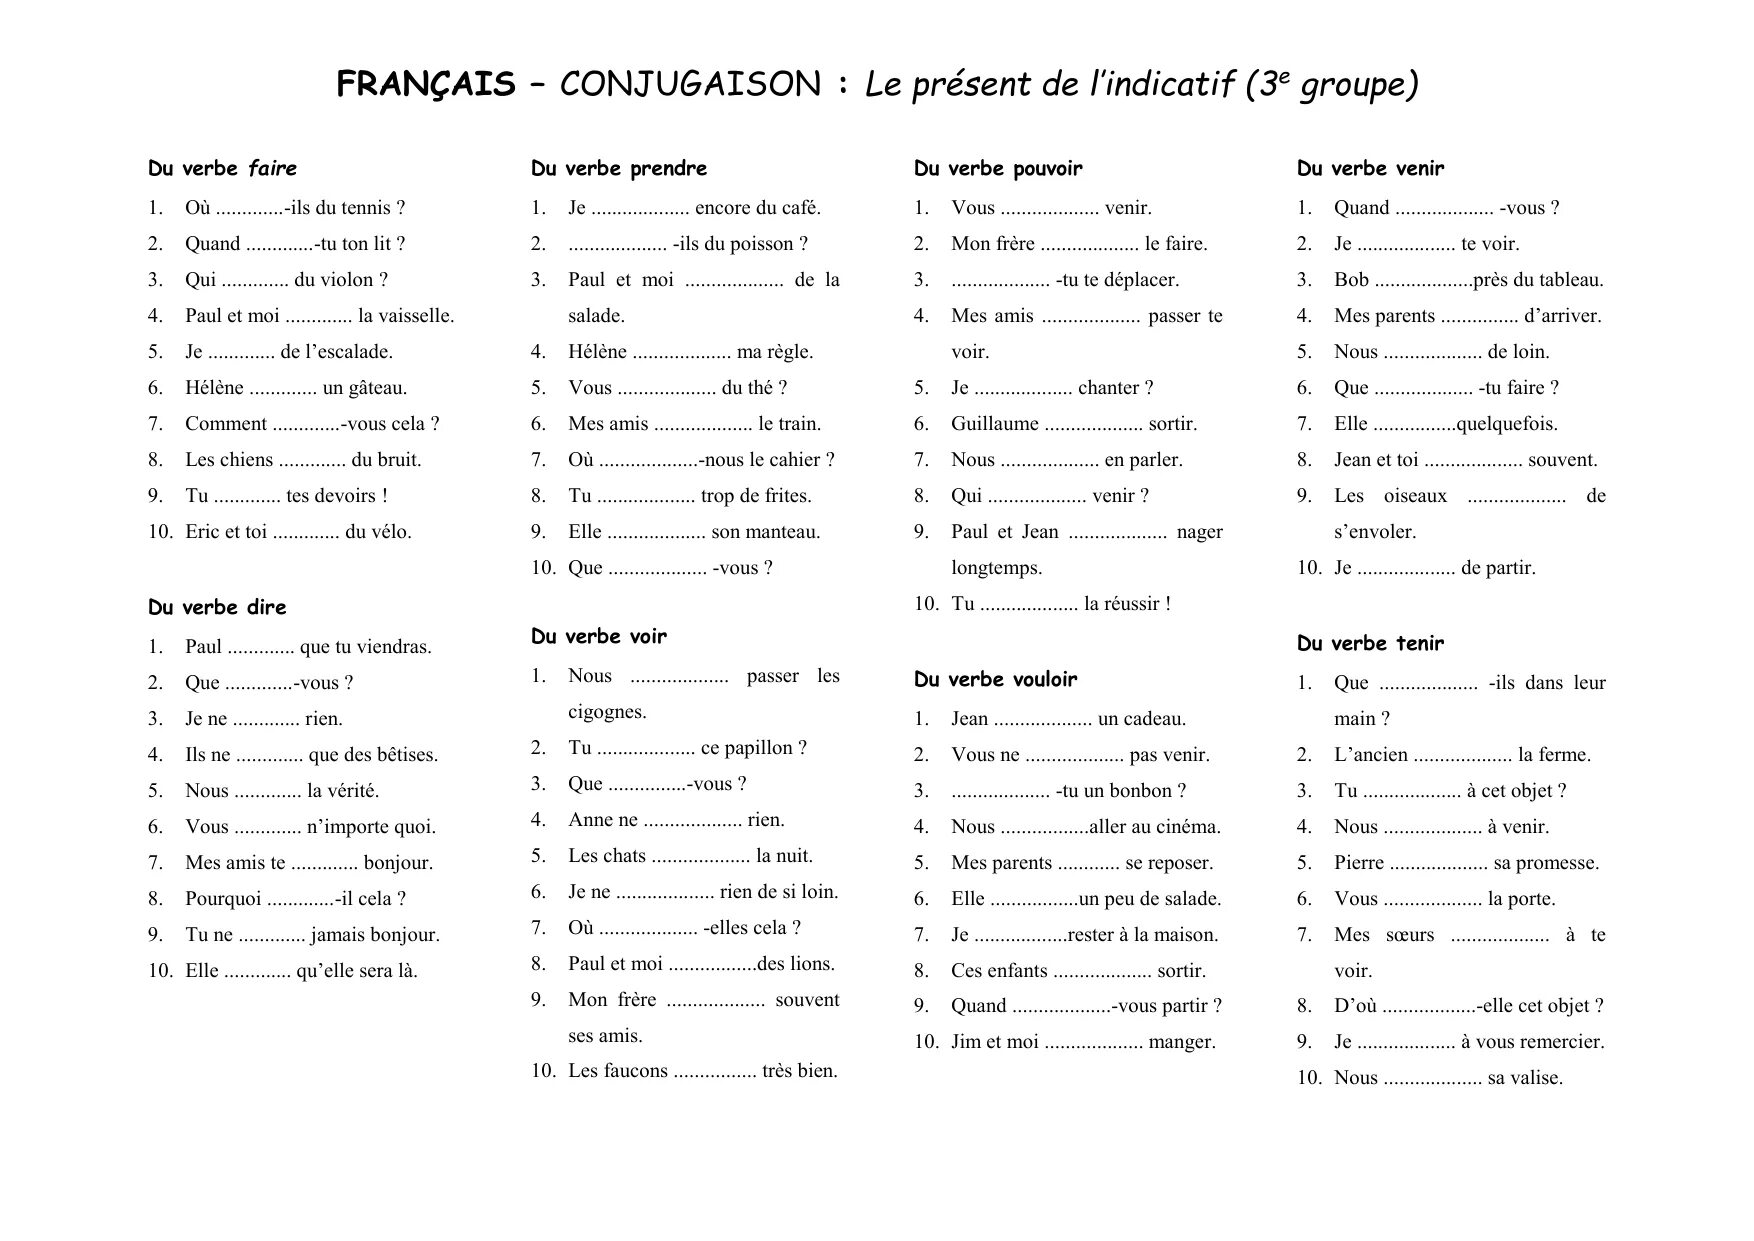 Present de l'indicatif во французском языке exercises. Present de l'indicatif во французском языке. Present французский упражнения. Present во французском языке упражнения.